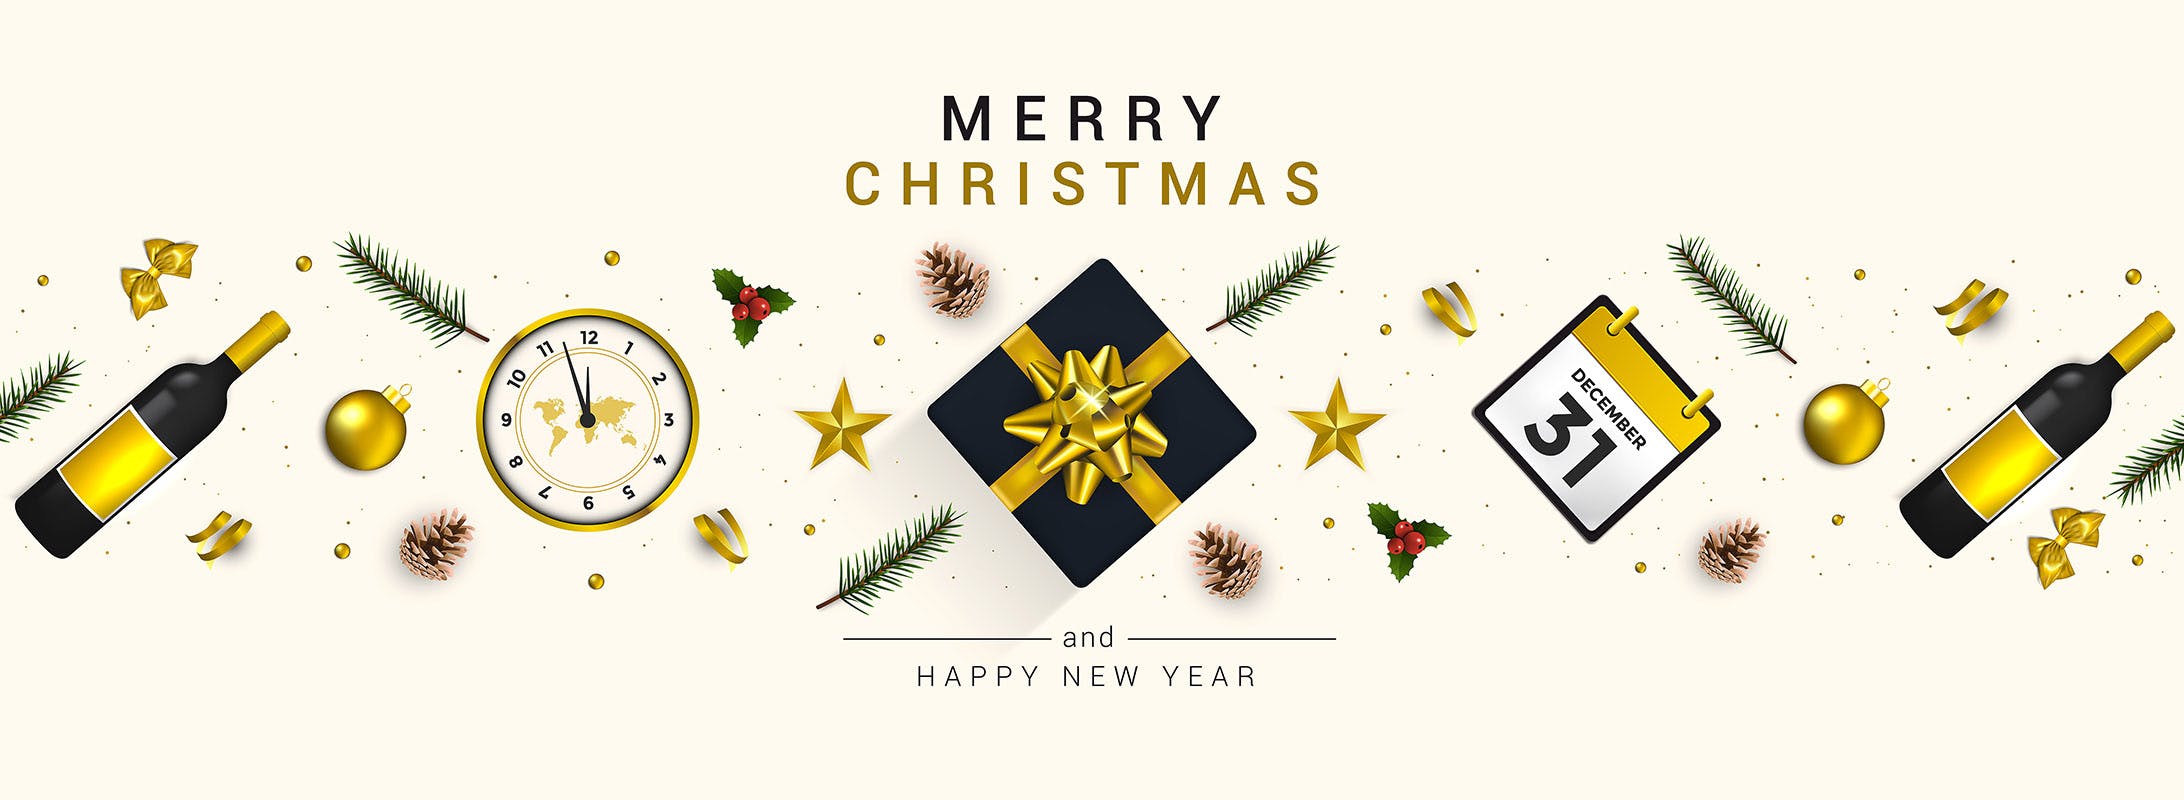 圣诞节/新年祝福主题贺卡设计模板v1 Merry Christmas and Happy New Year greeting cards插图(8)